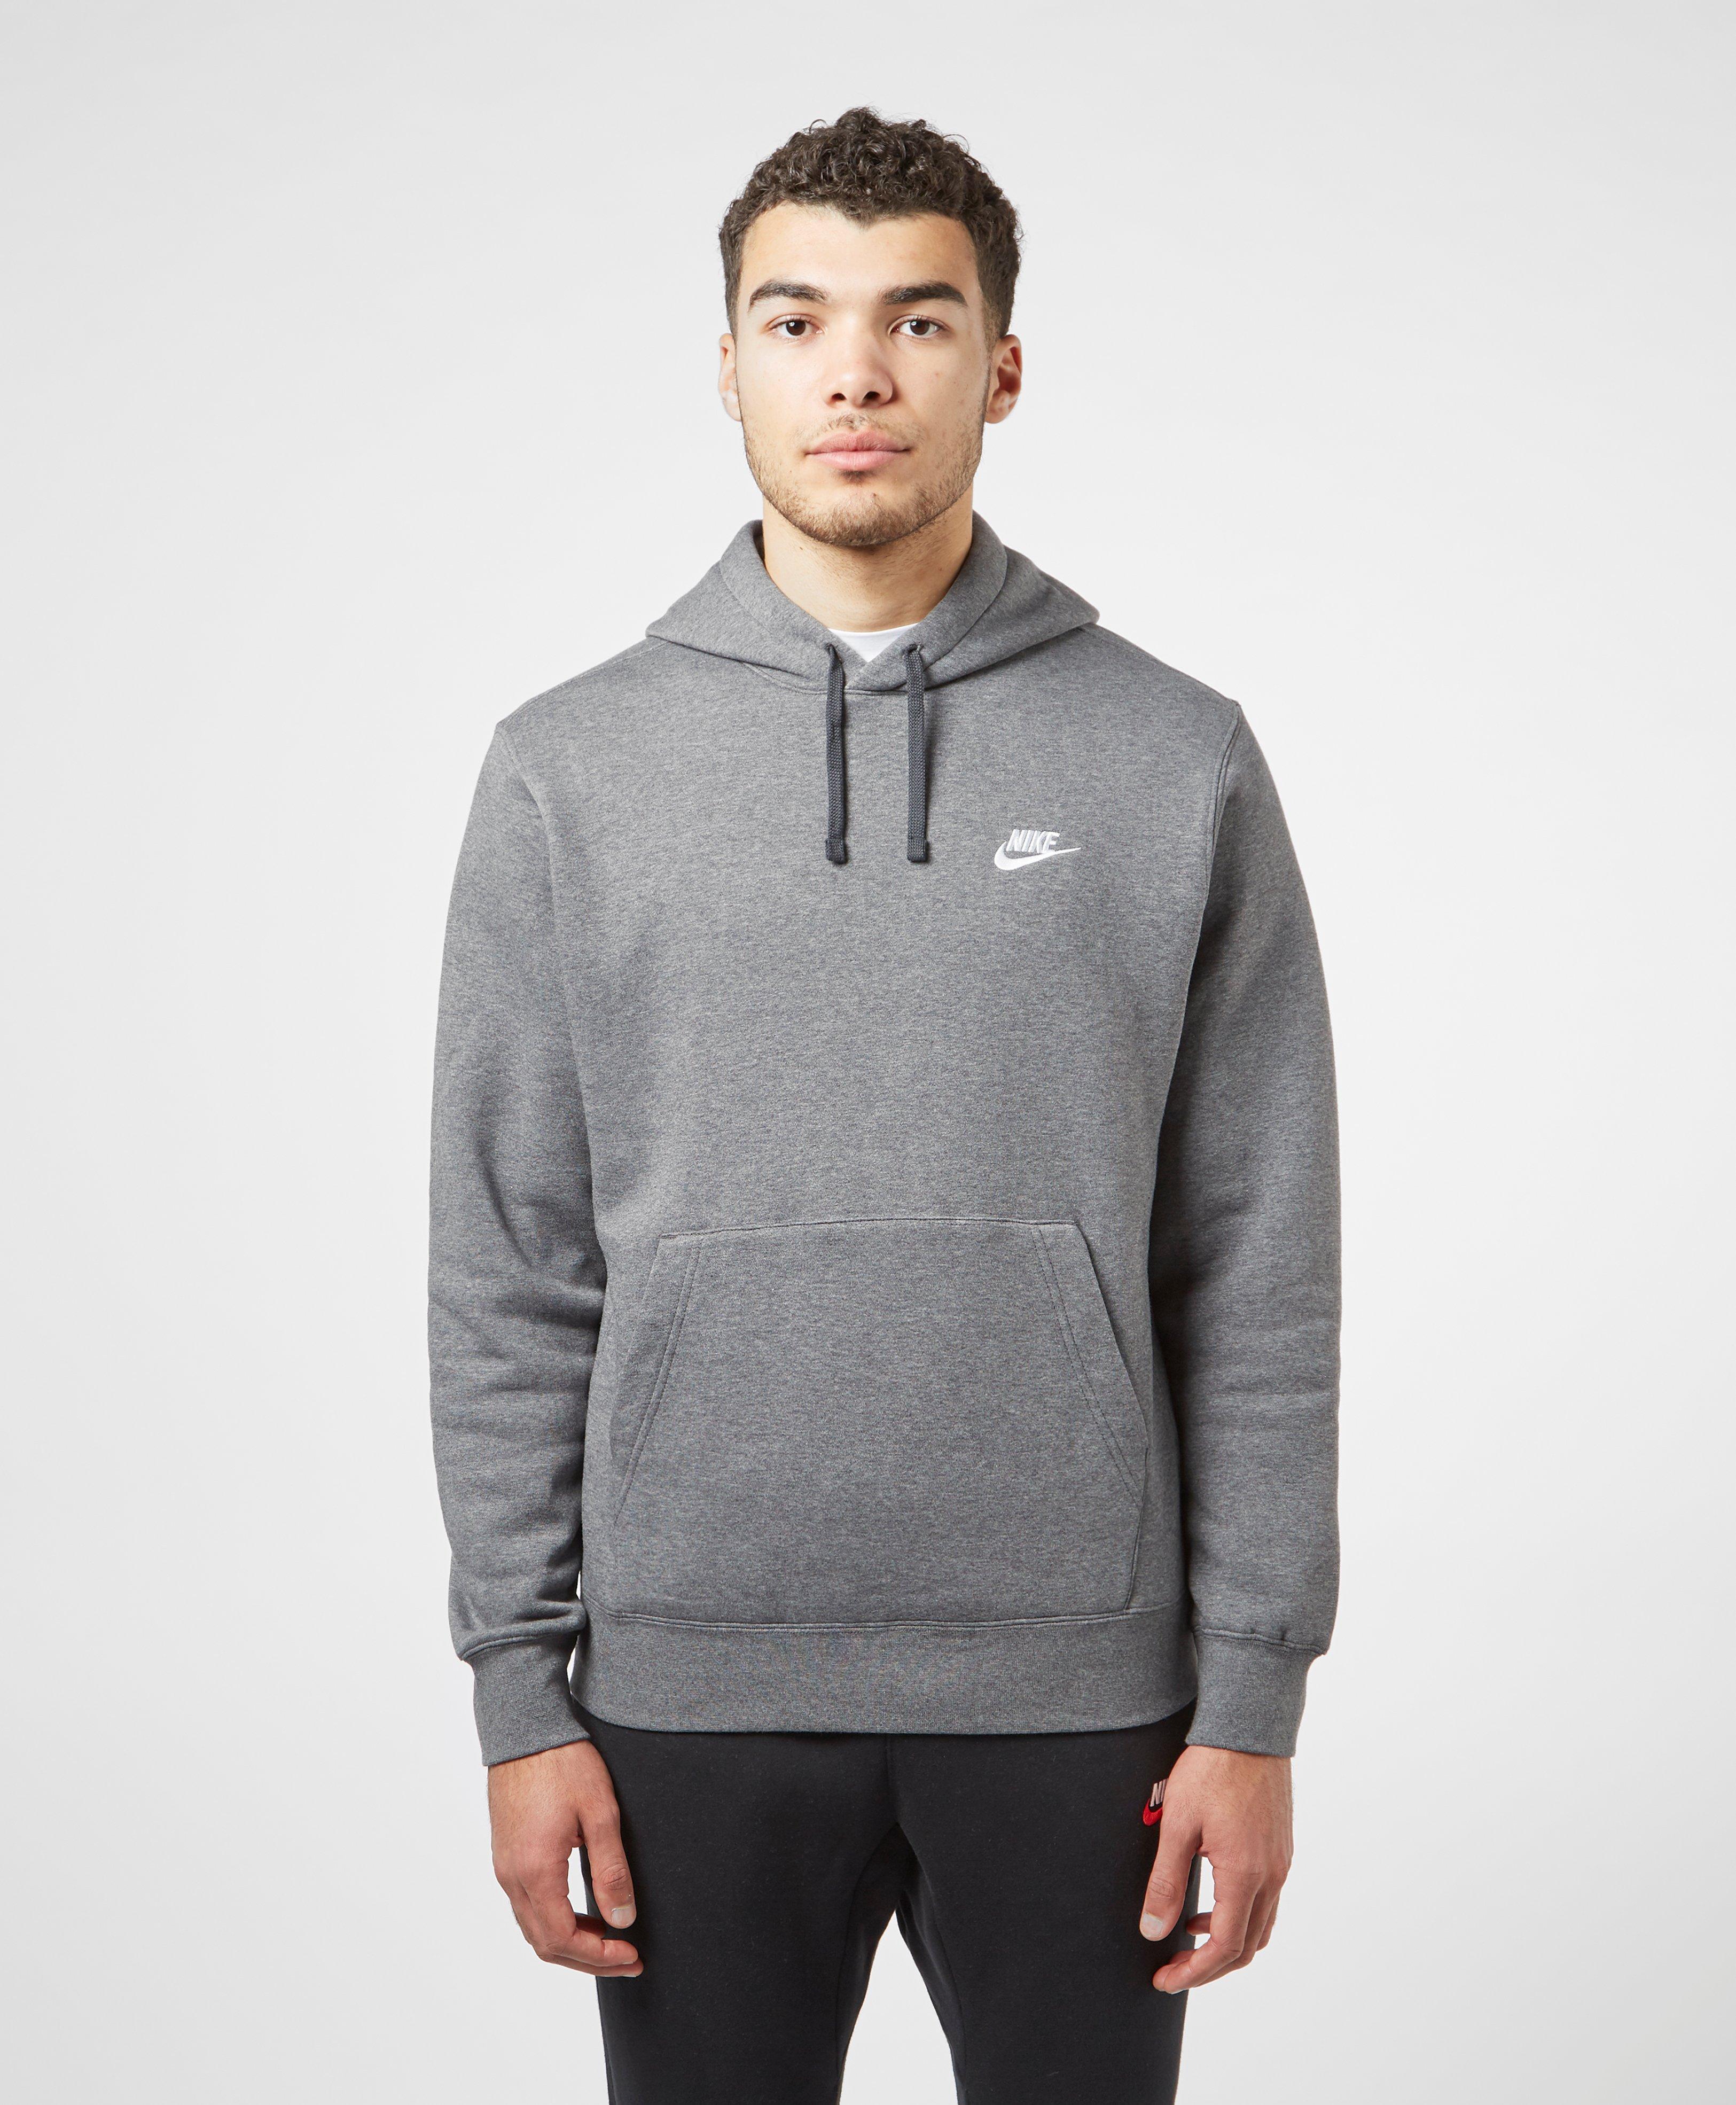 Nike Cotton Club Fleece Hoodie in Grey (Gray) for Men - Lyst